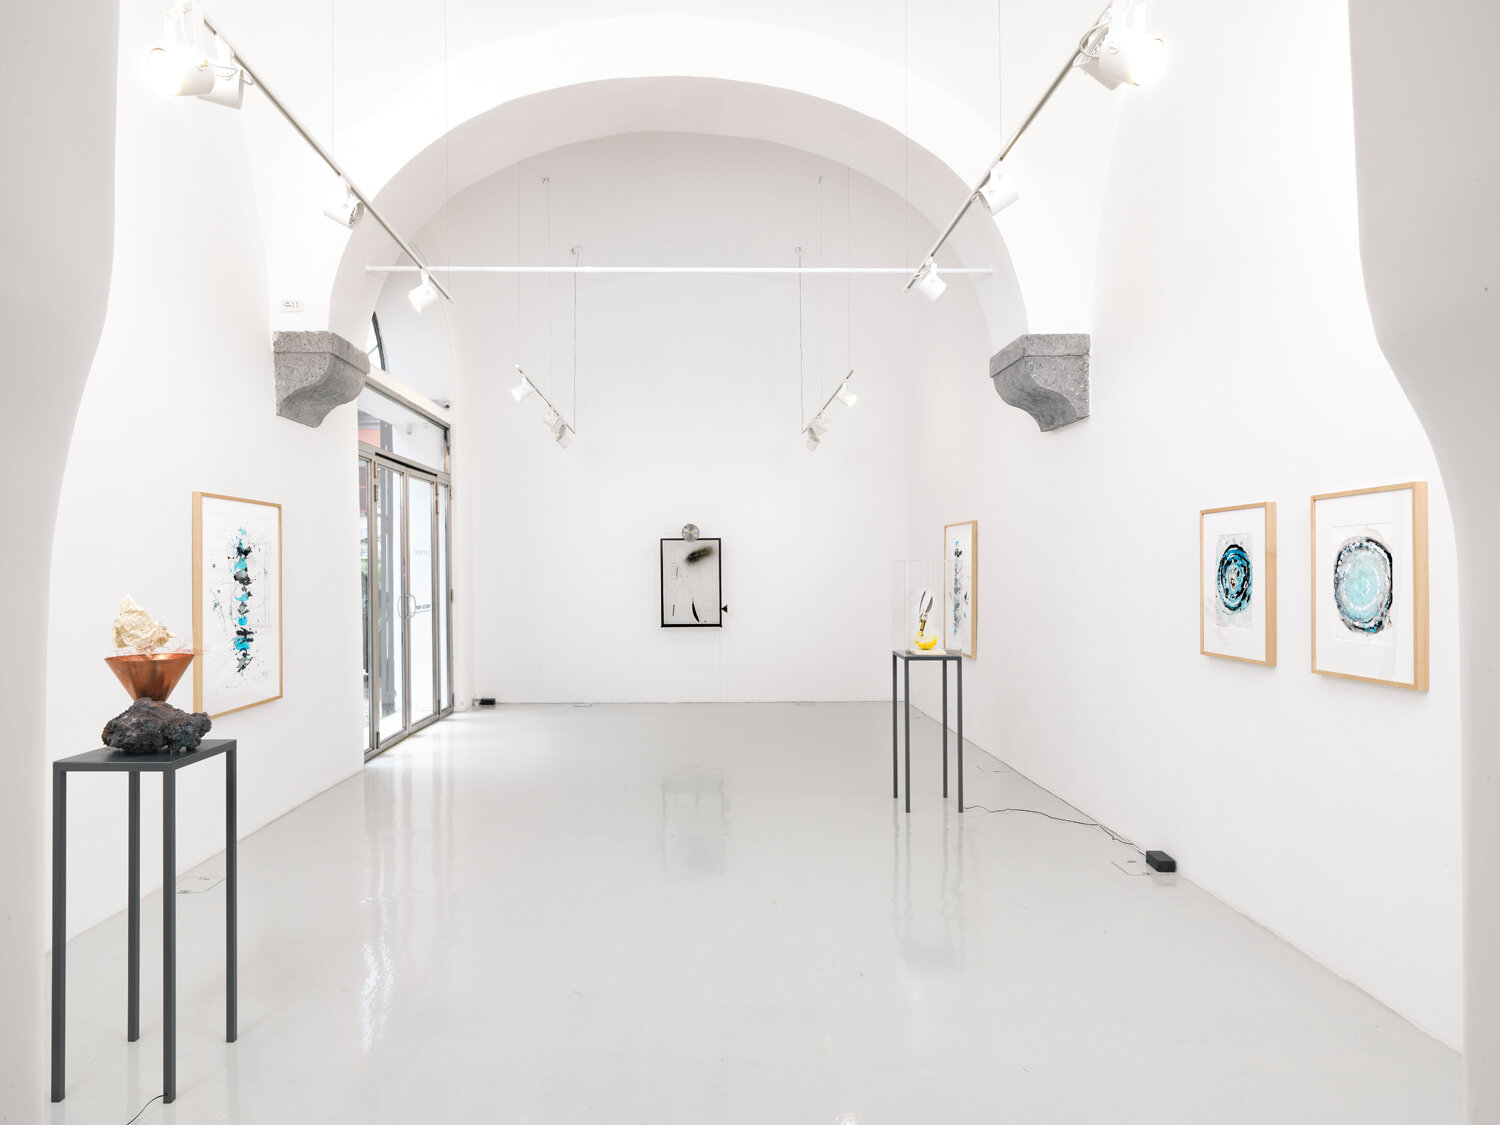 Rebecca Horn, The Vertebra Oracle in Napoli 2015, 10 October – 31 December 2015, installation view